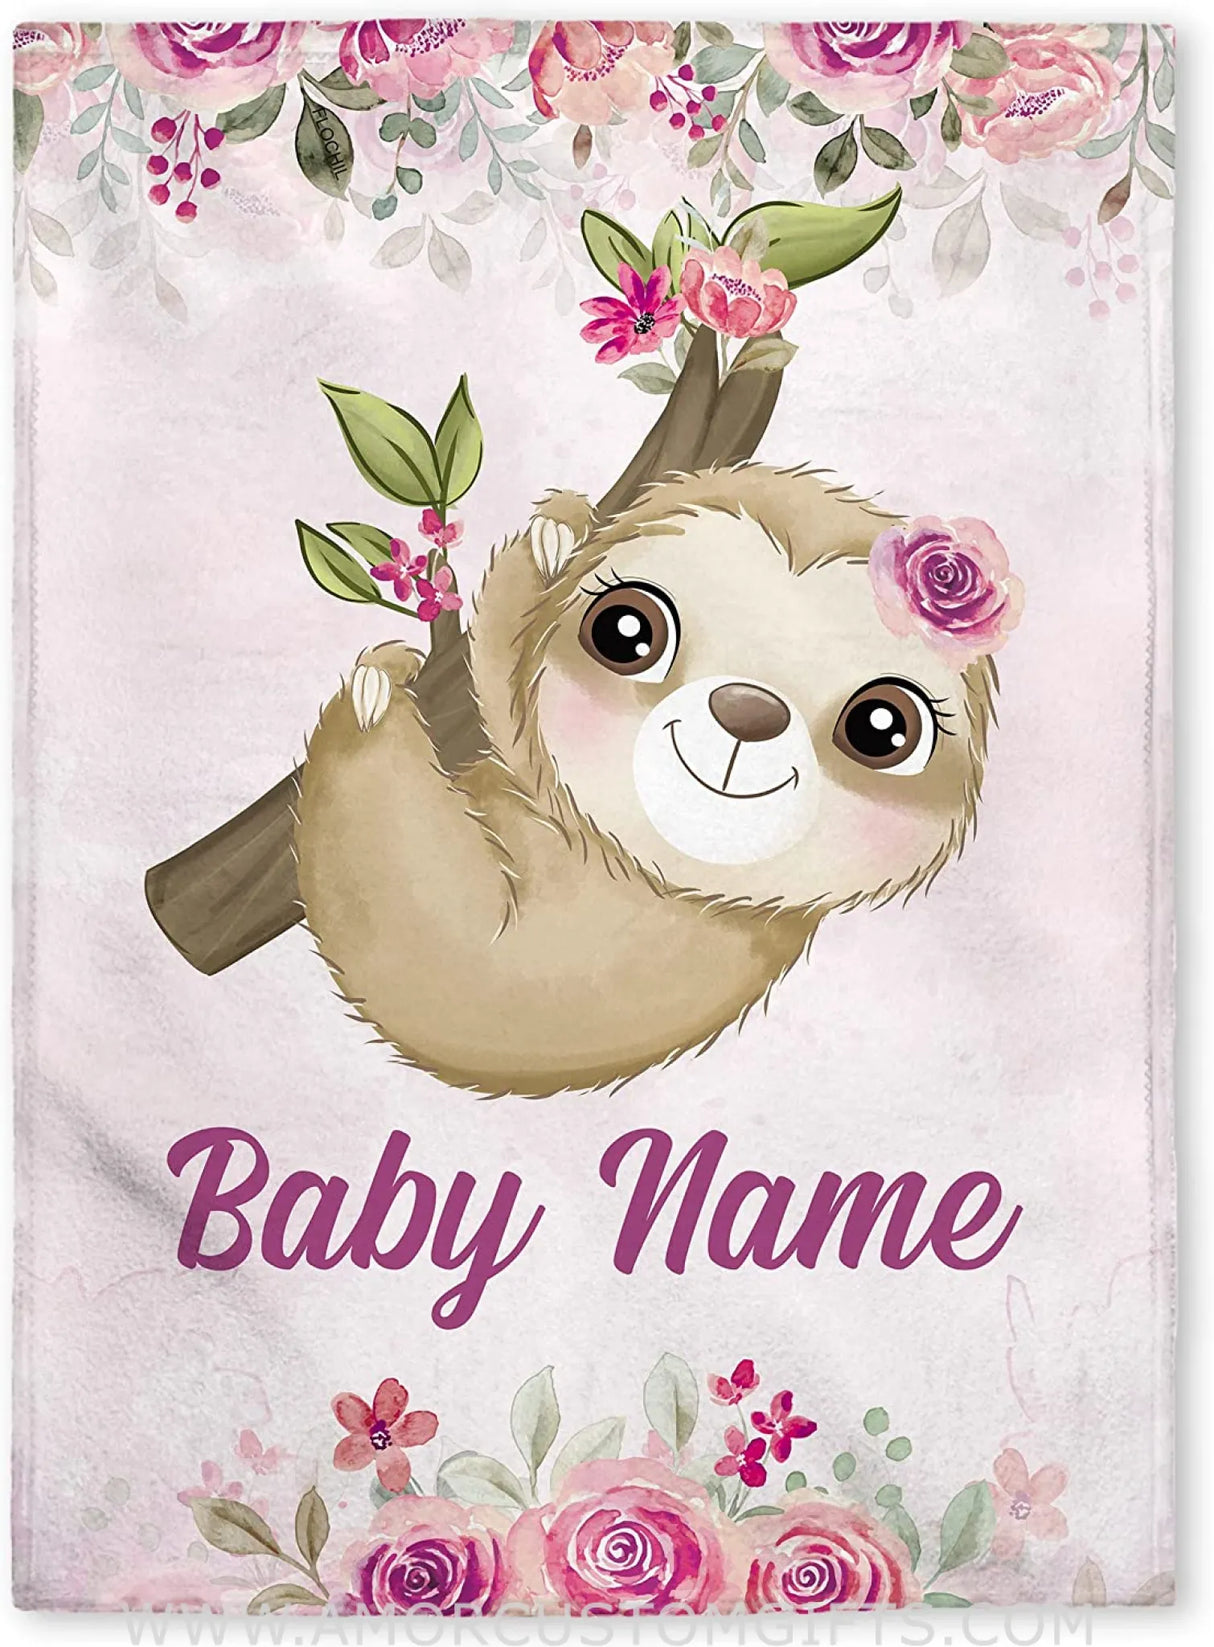 Blankets Custom Baby Blanket - Baby Blanket with Name for Girls, Best Gift for Baby, Newborn Sloth Plush Fleece 30x40